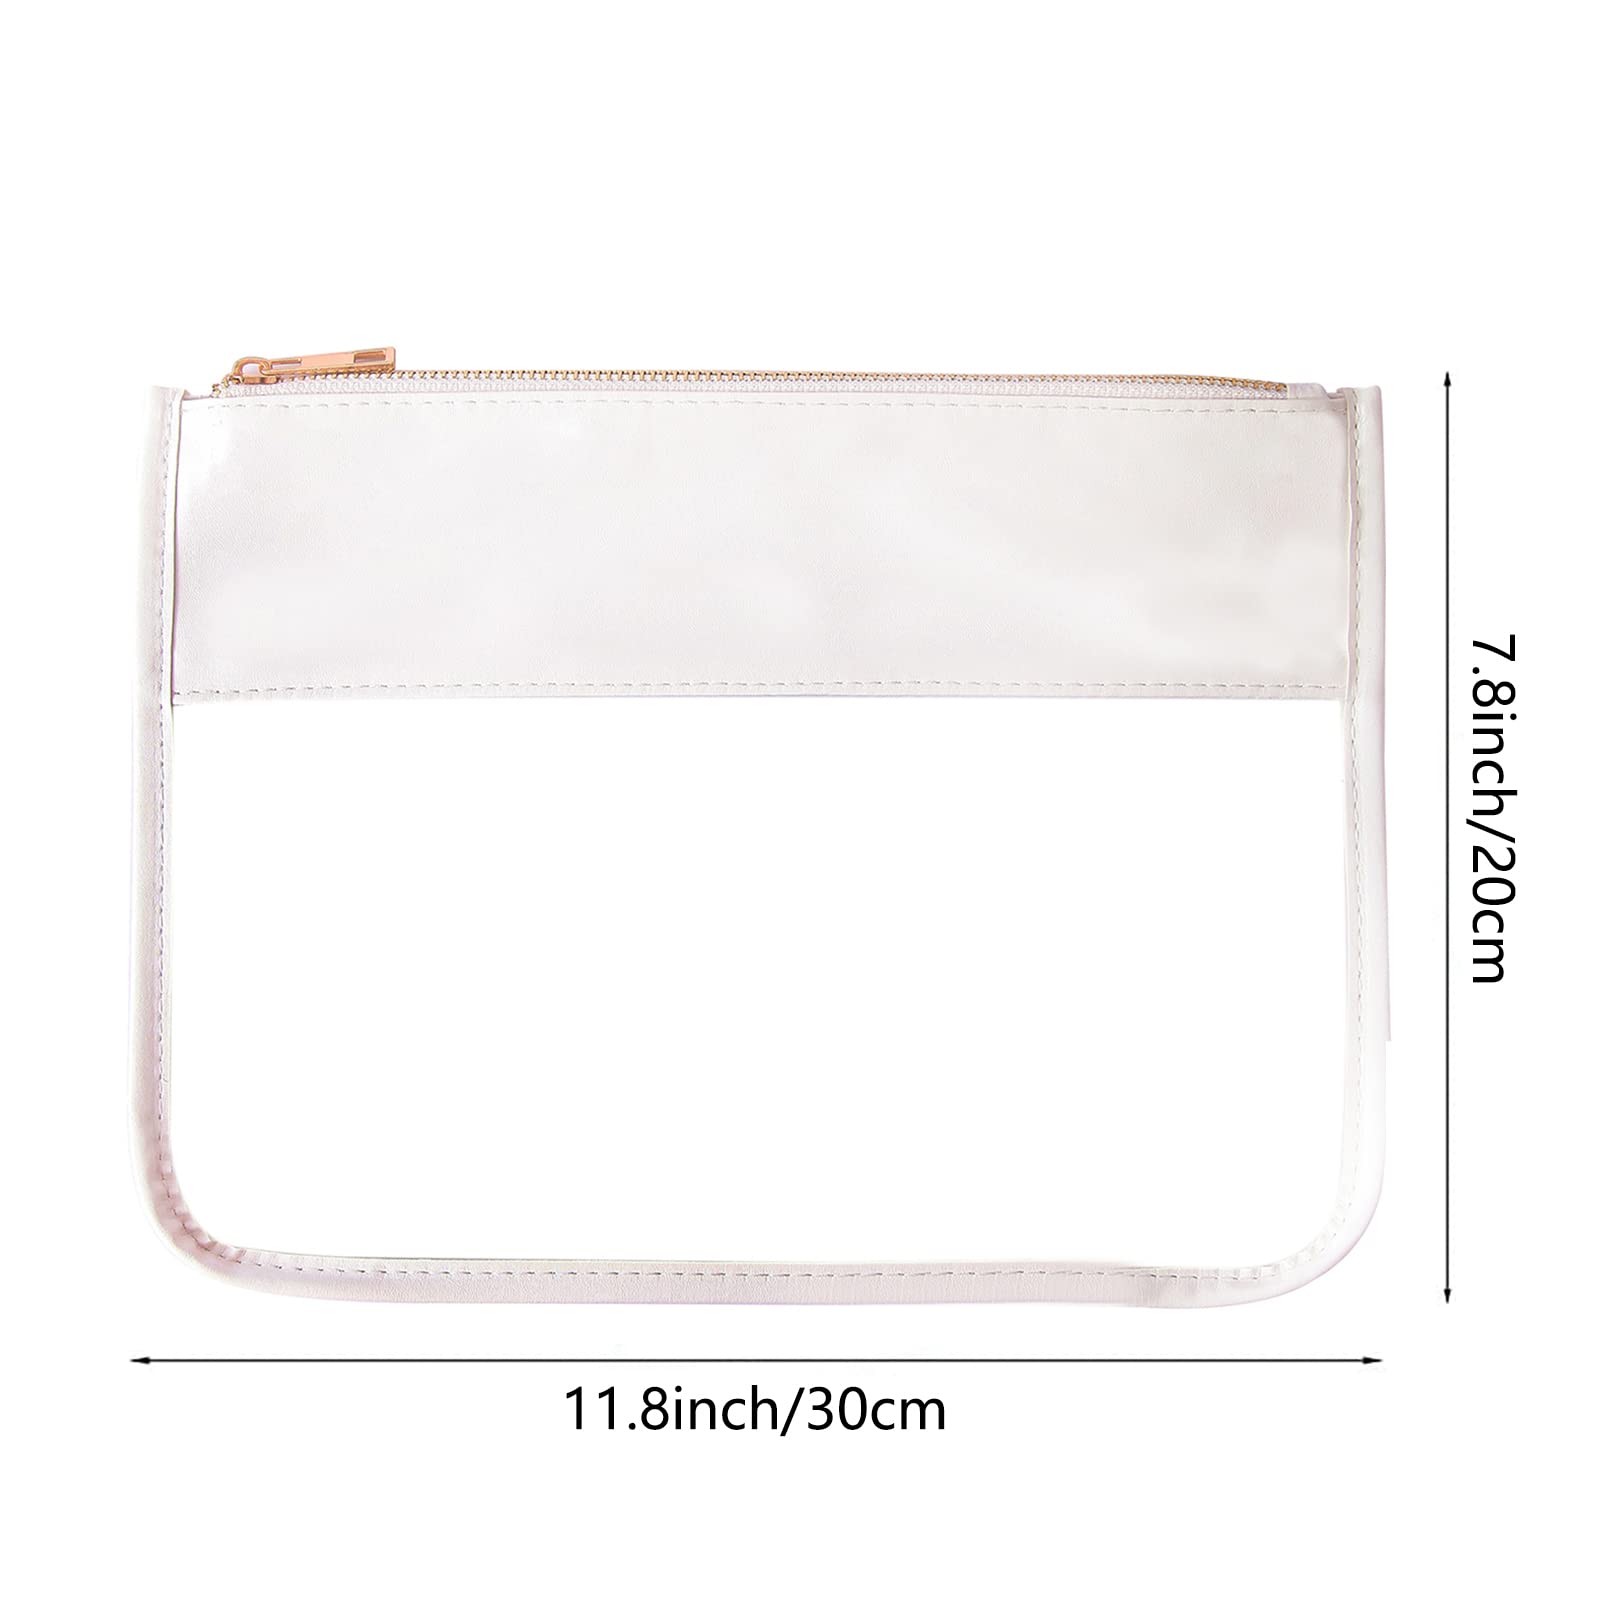 Makeup Bag Waterproof Leather Cosmetic Bag Toiletry Bag,DIY Chenille Letter Bag Nvlon Clear Travel Makeup Bag for Women Girls (White)